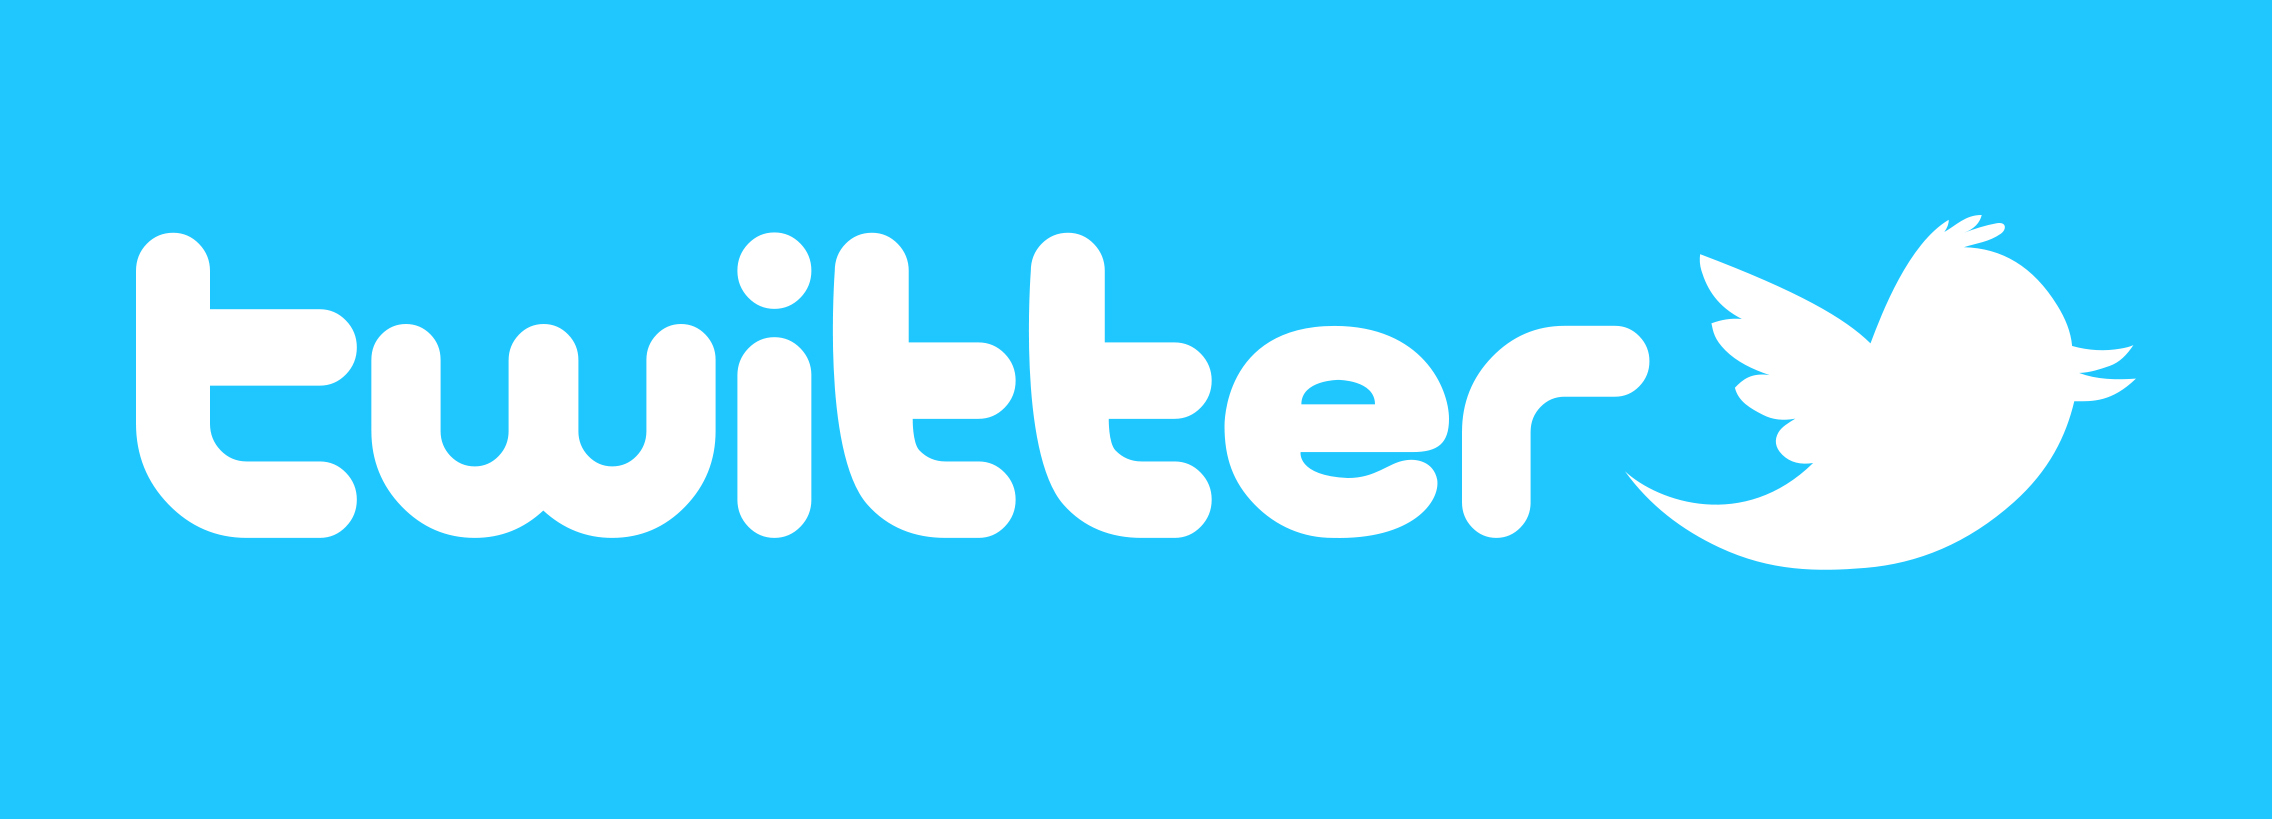 official twitter logo